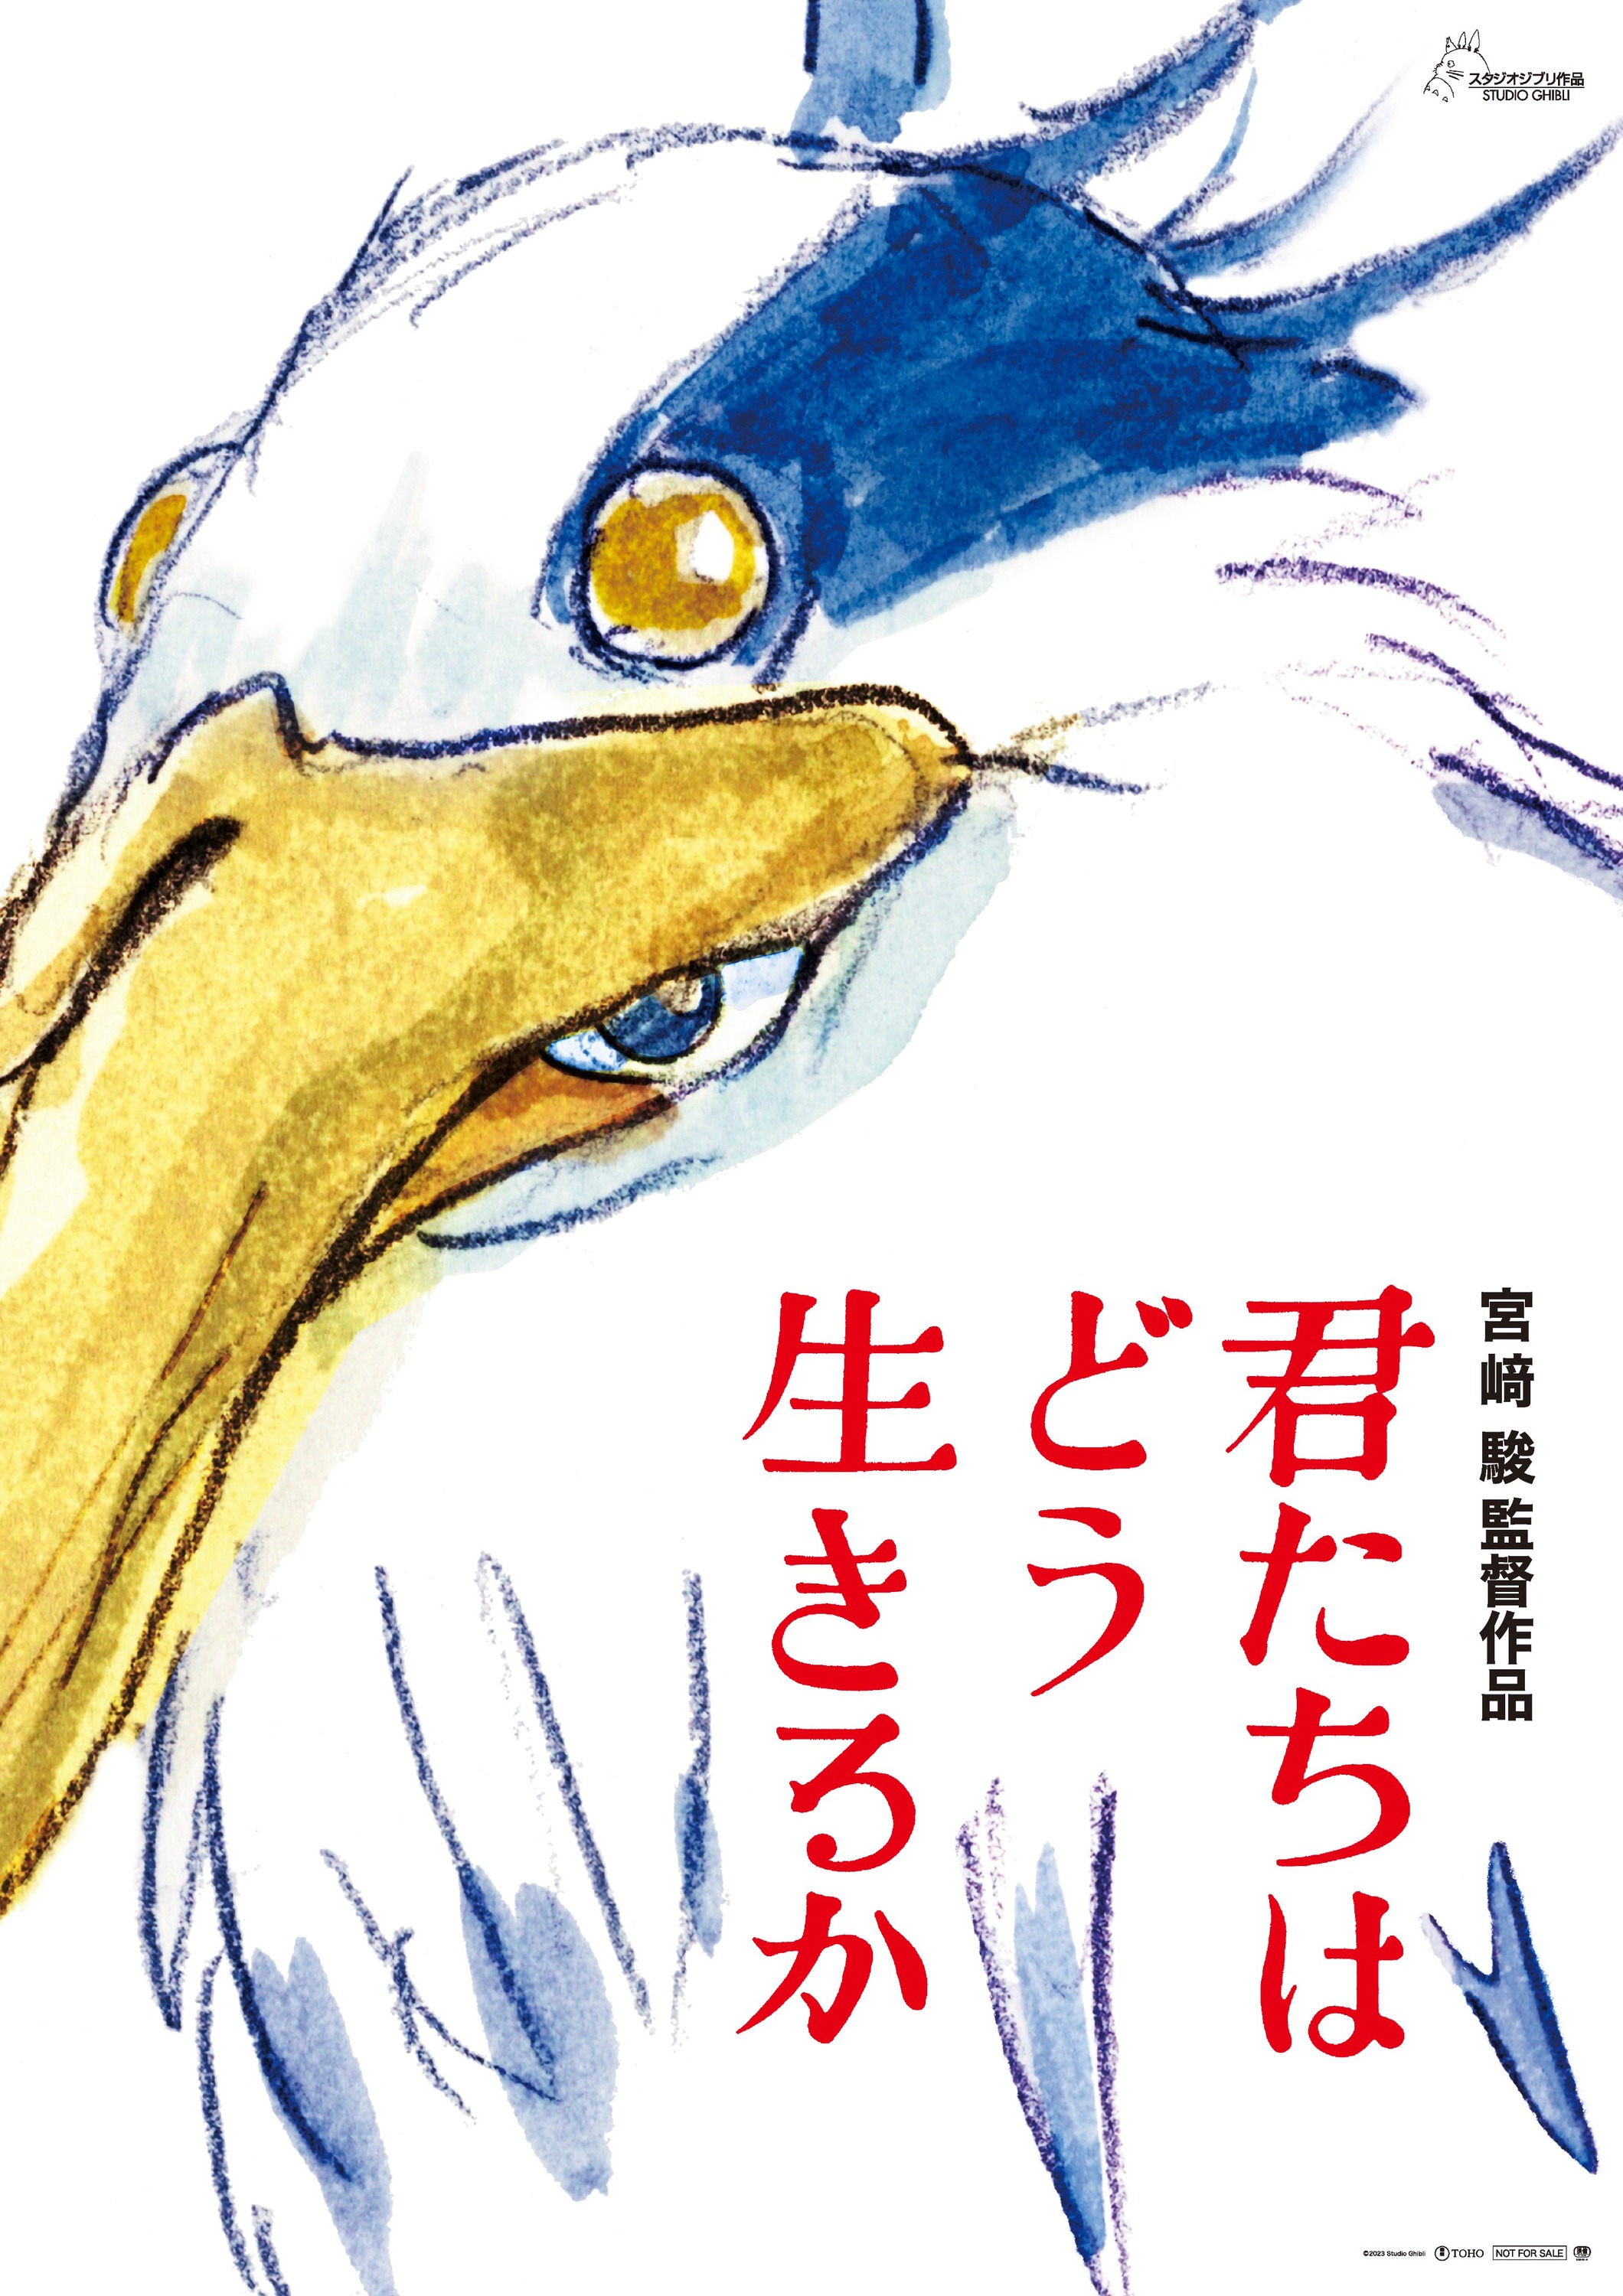 Mega Sized Movie Poster Image for Kimitachi wa dô ikiru ka (#1 of 9)